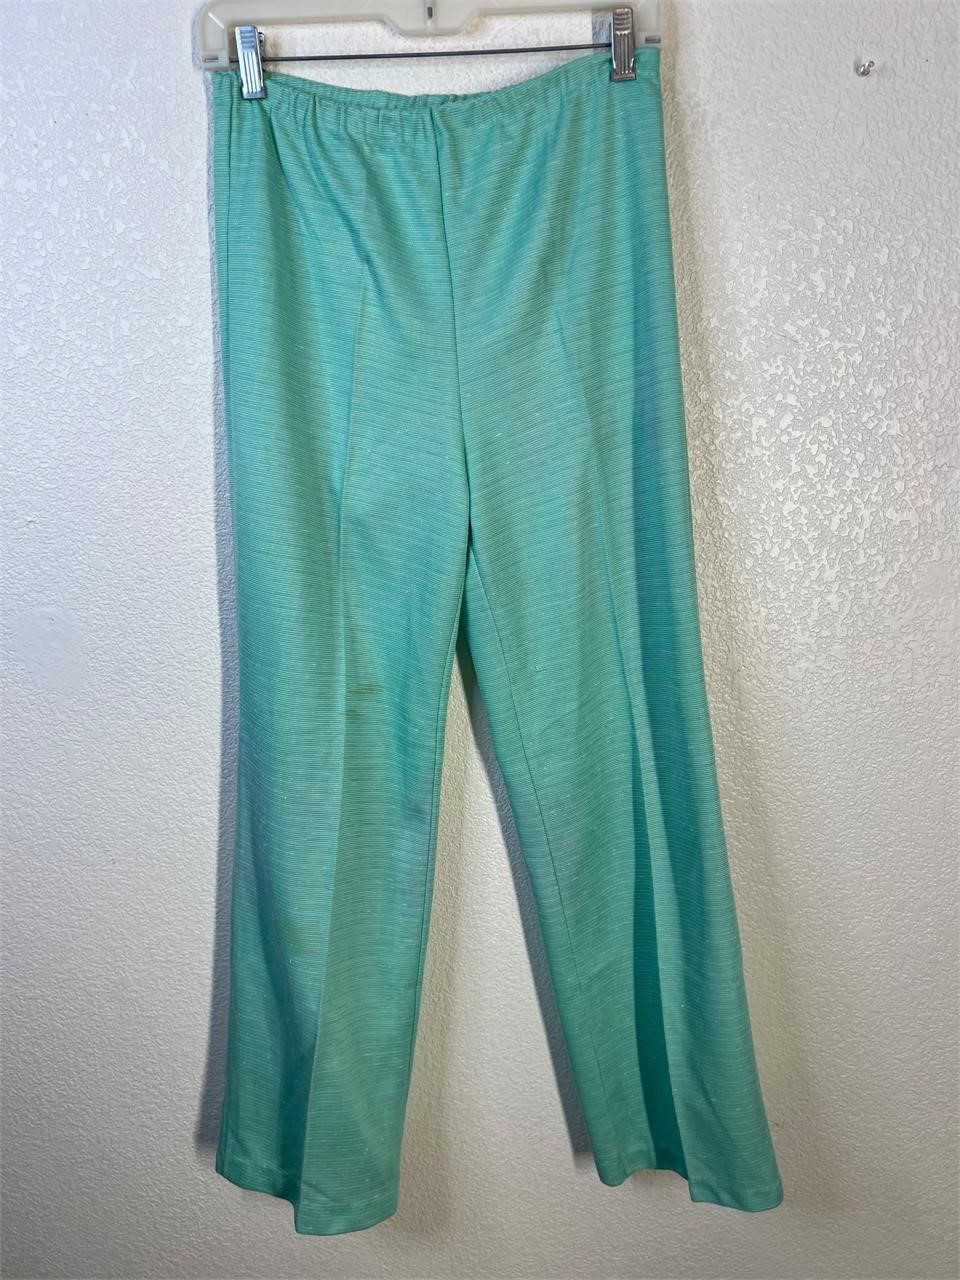 Vintage Stretchy Aqua Pants